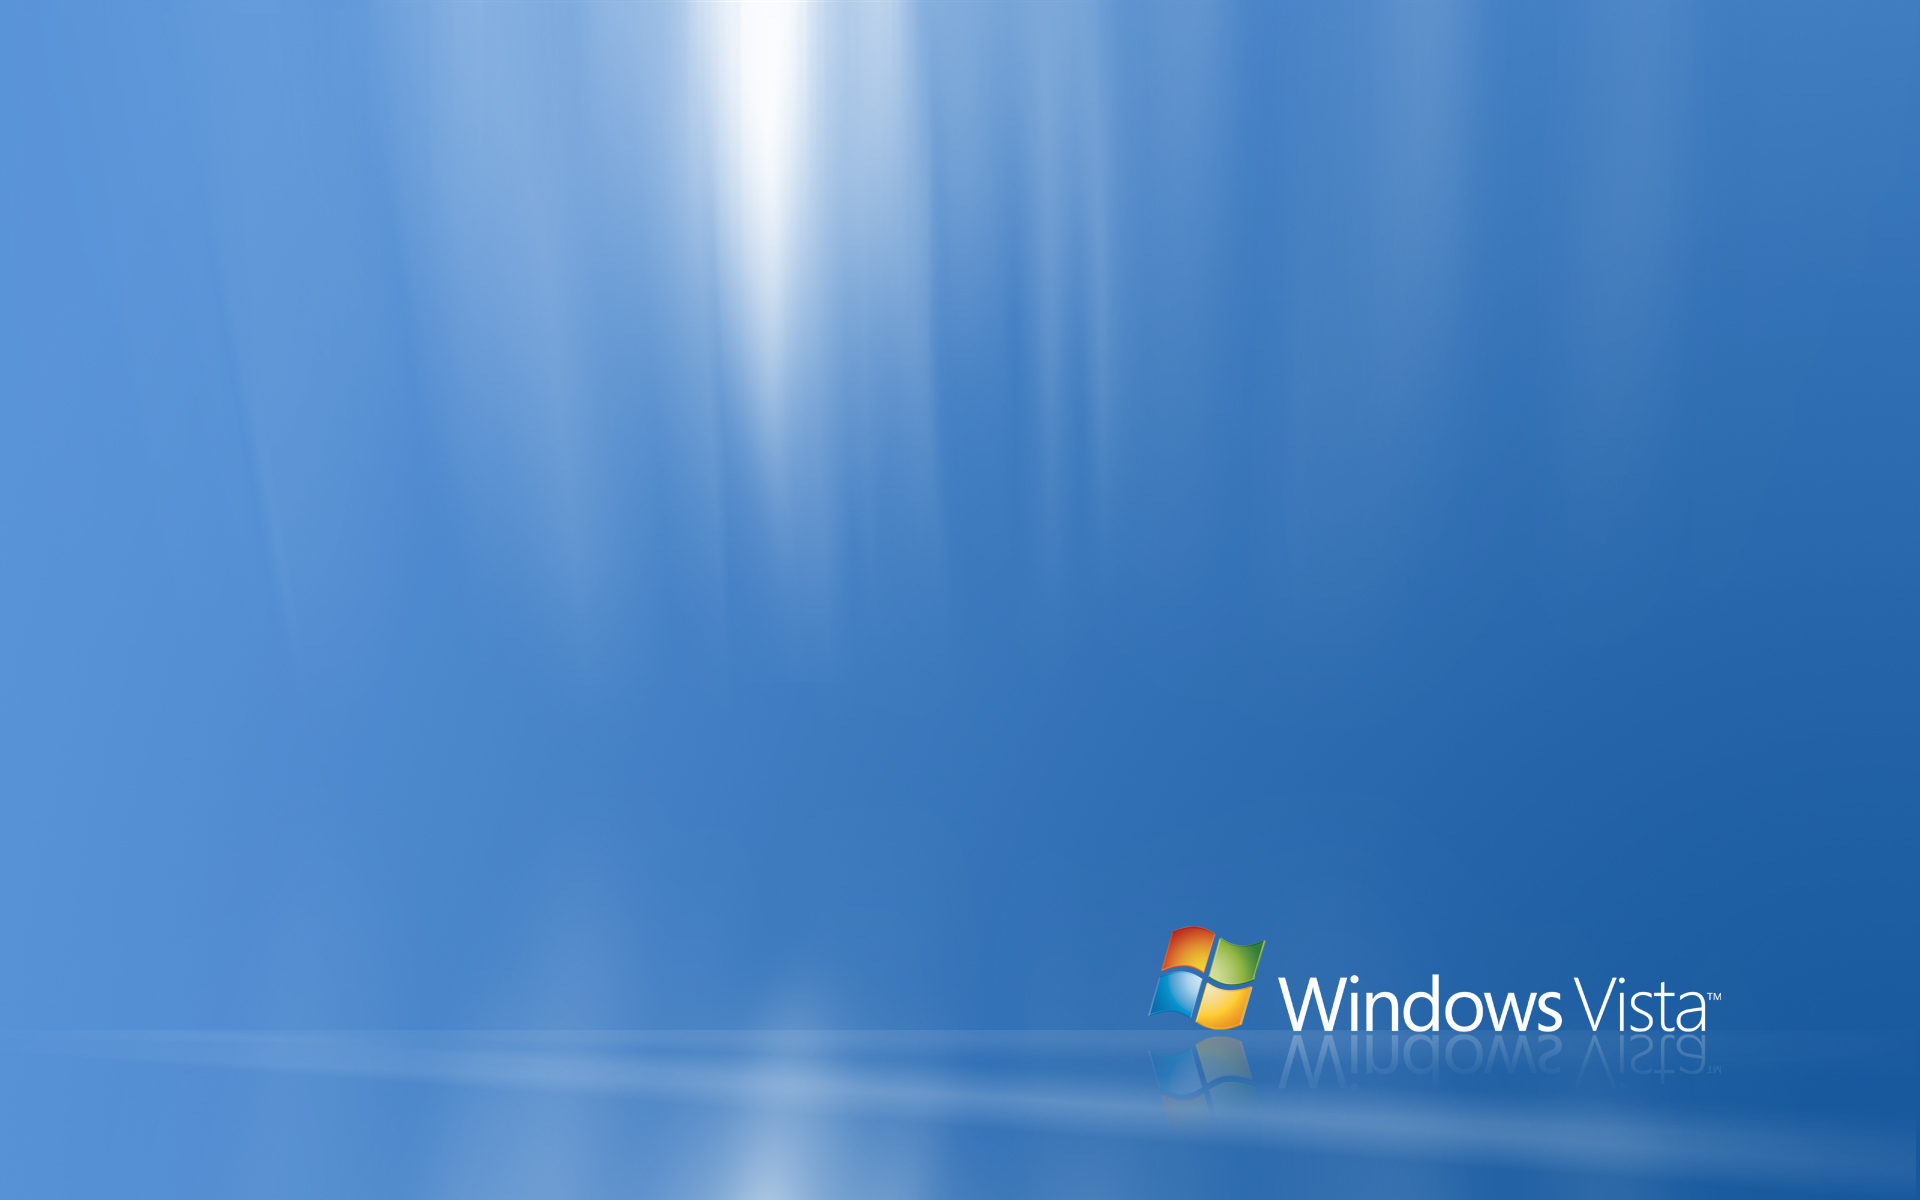 Windows Vista Help Tips2 Jpg